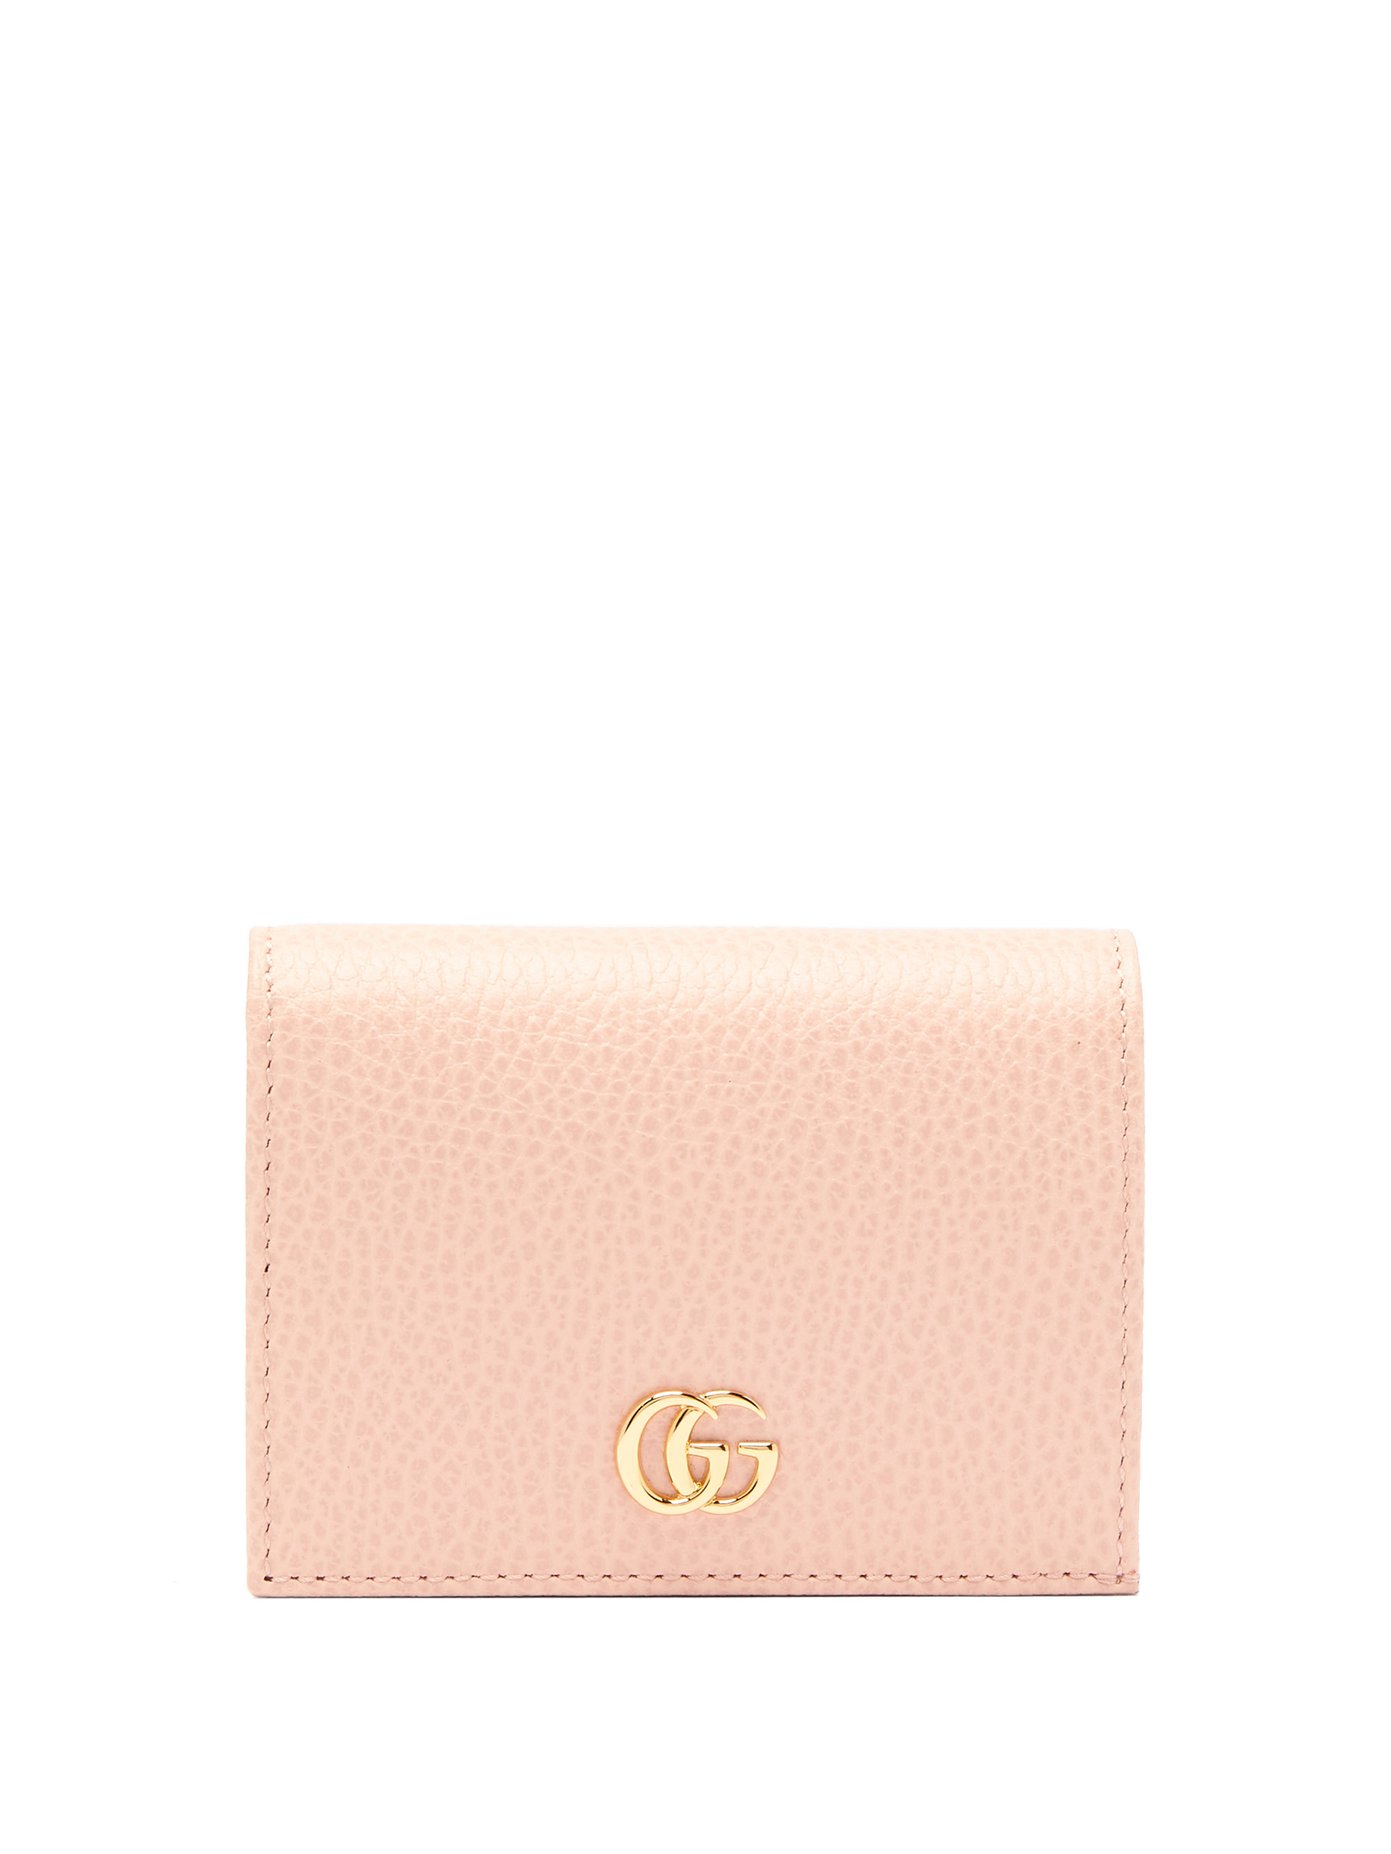 light pink gucci wallet, OFF 74%,www 